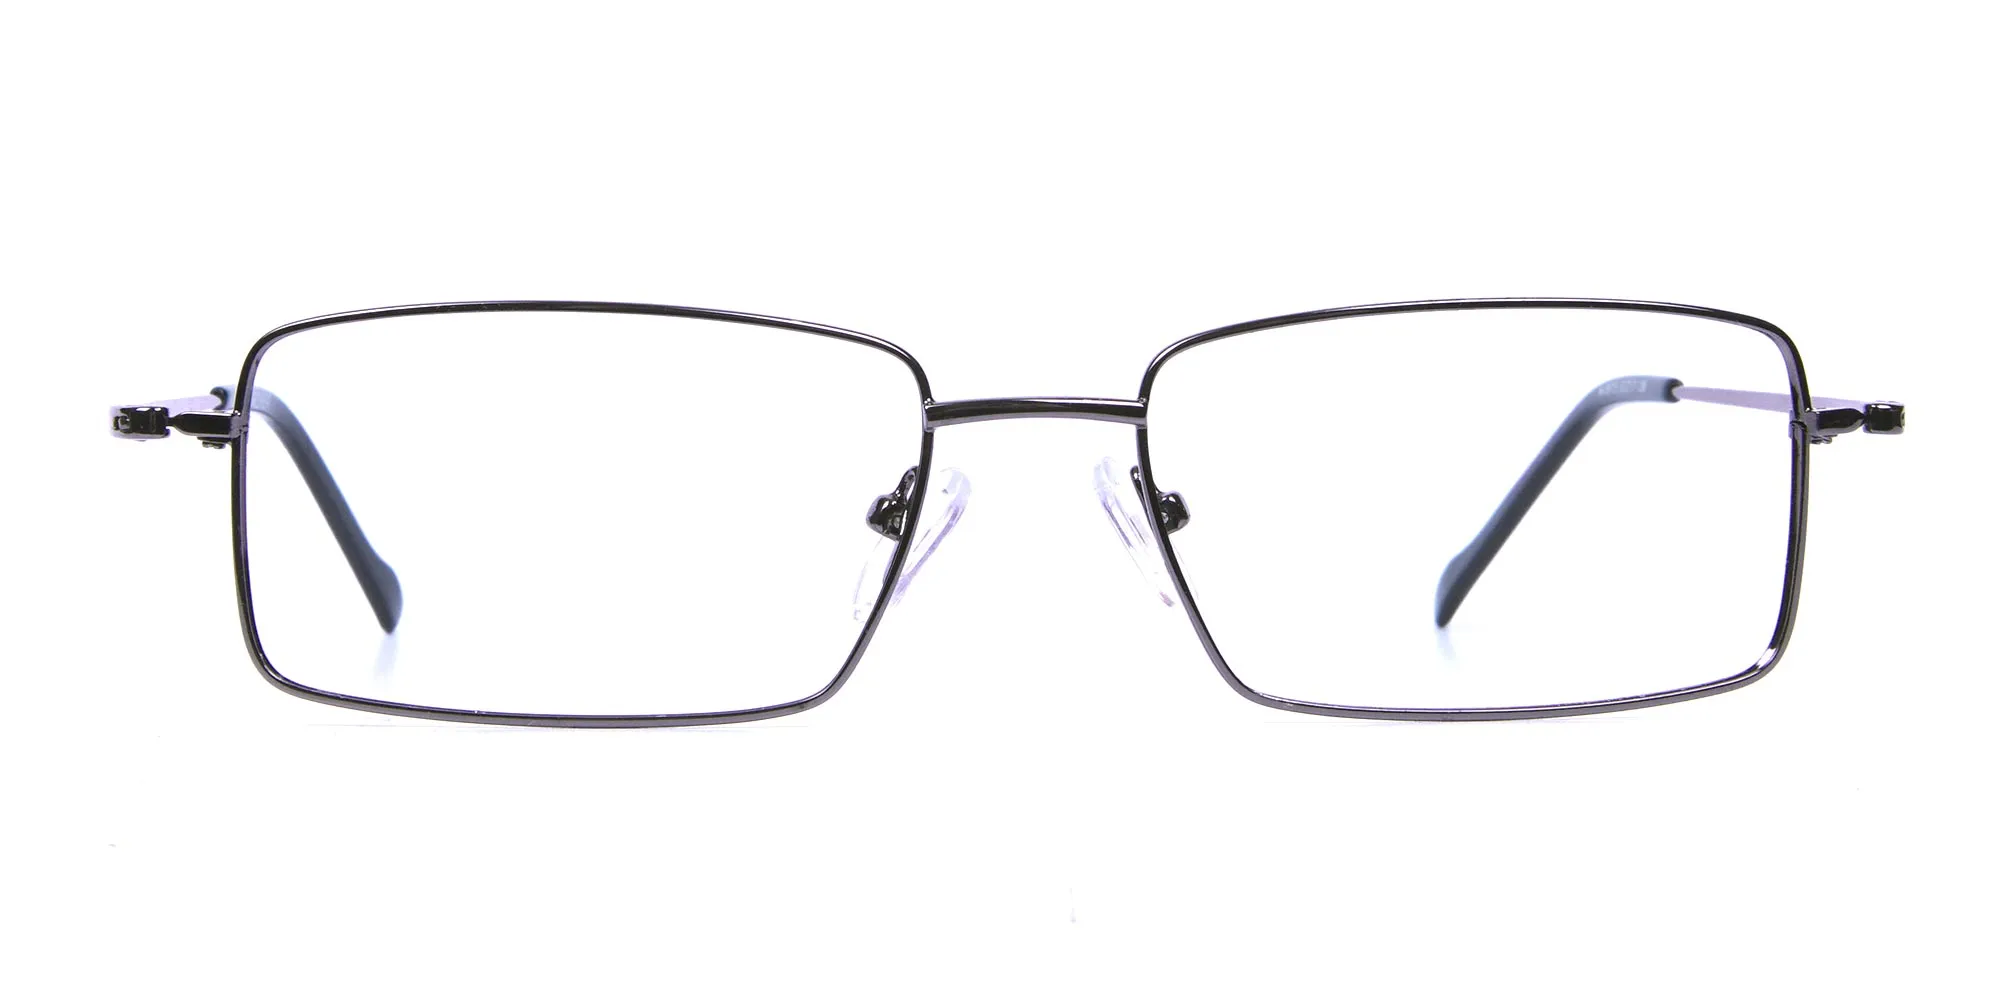 Titanium Glasses in Gunmetal, Eyeglasses - 2